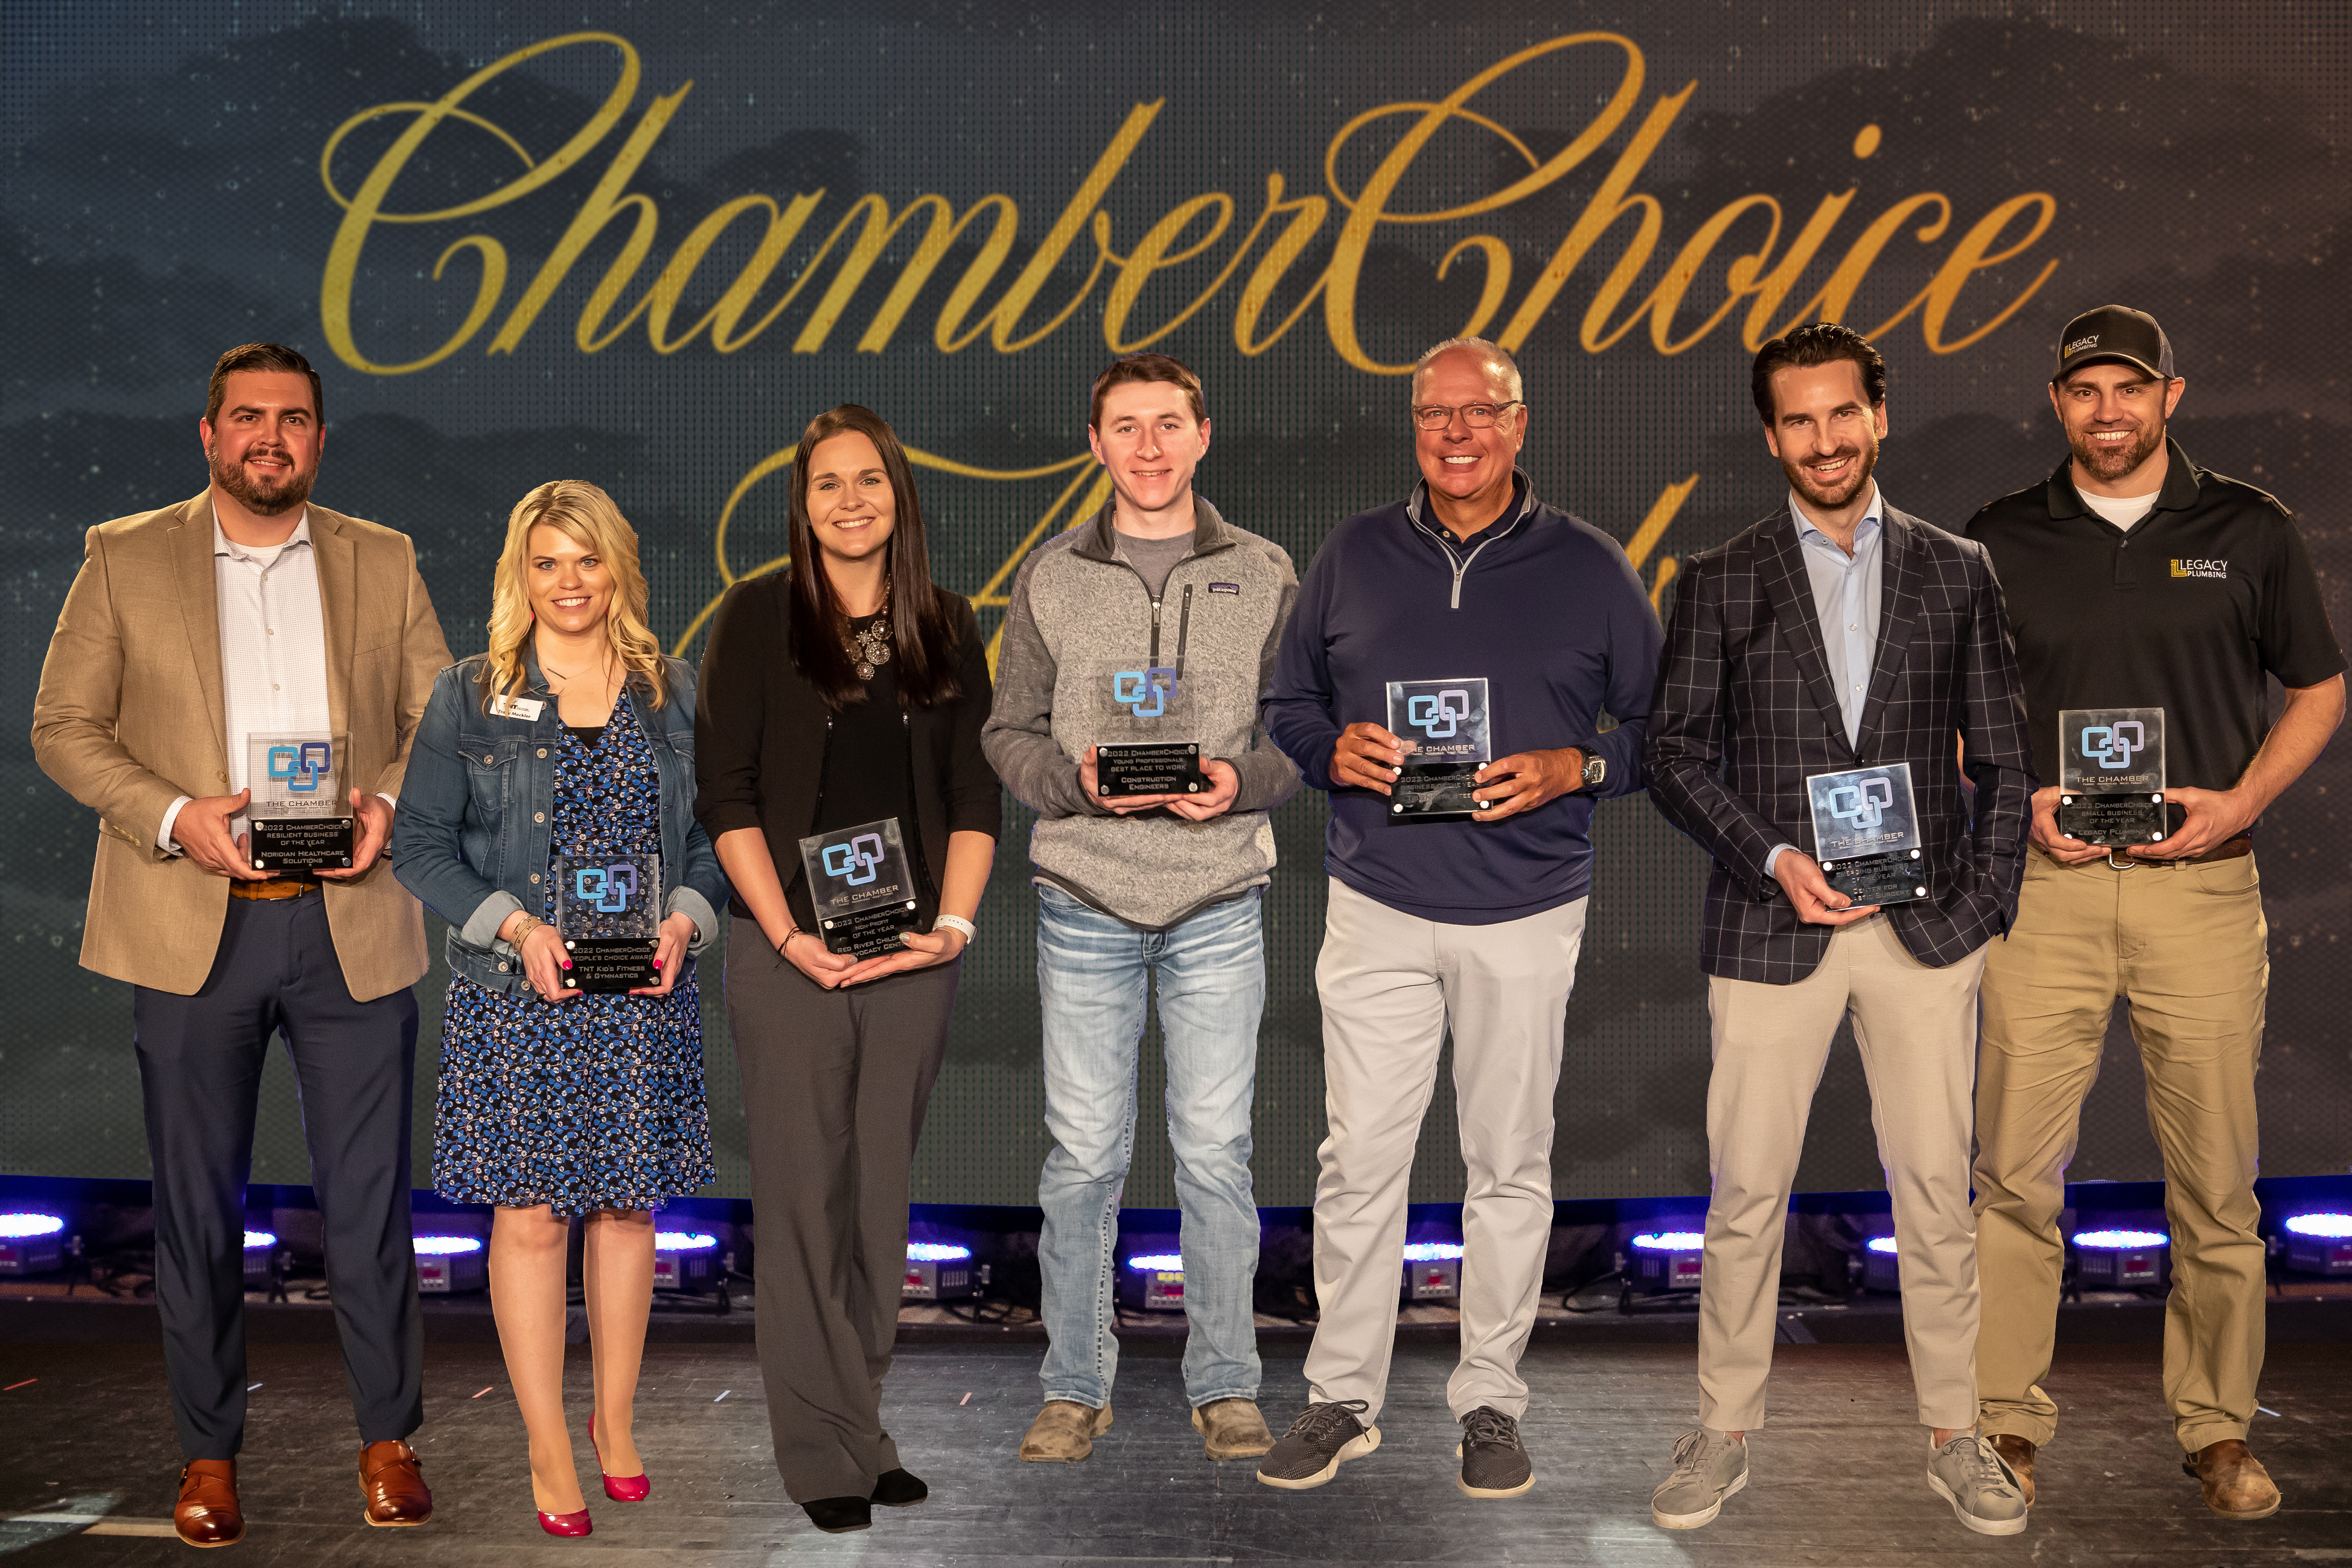 2022 ChamberChoice Award Winners